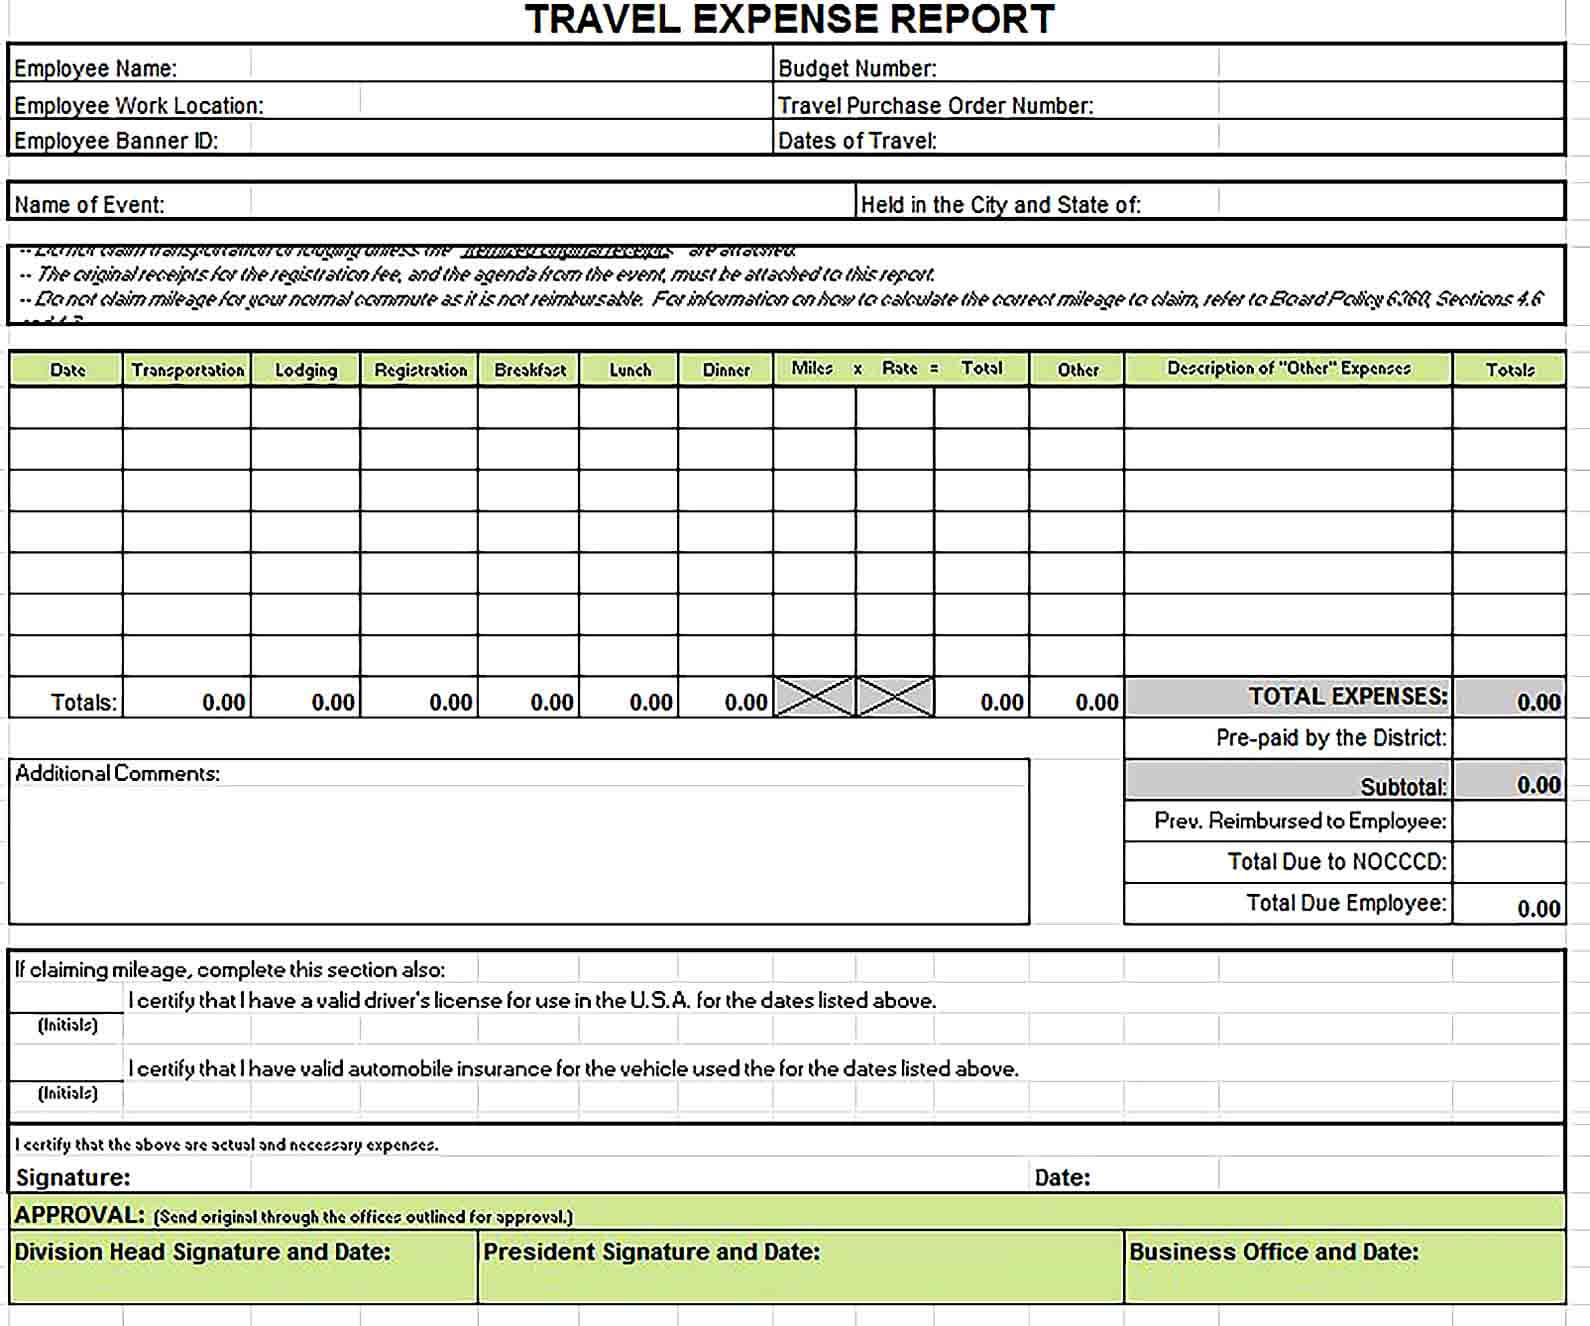 Sample Travel Expense Report 043010